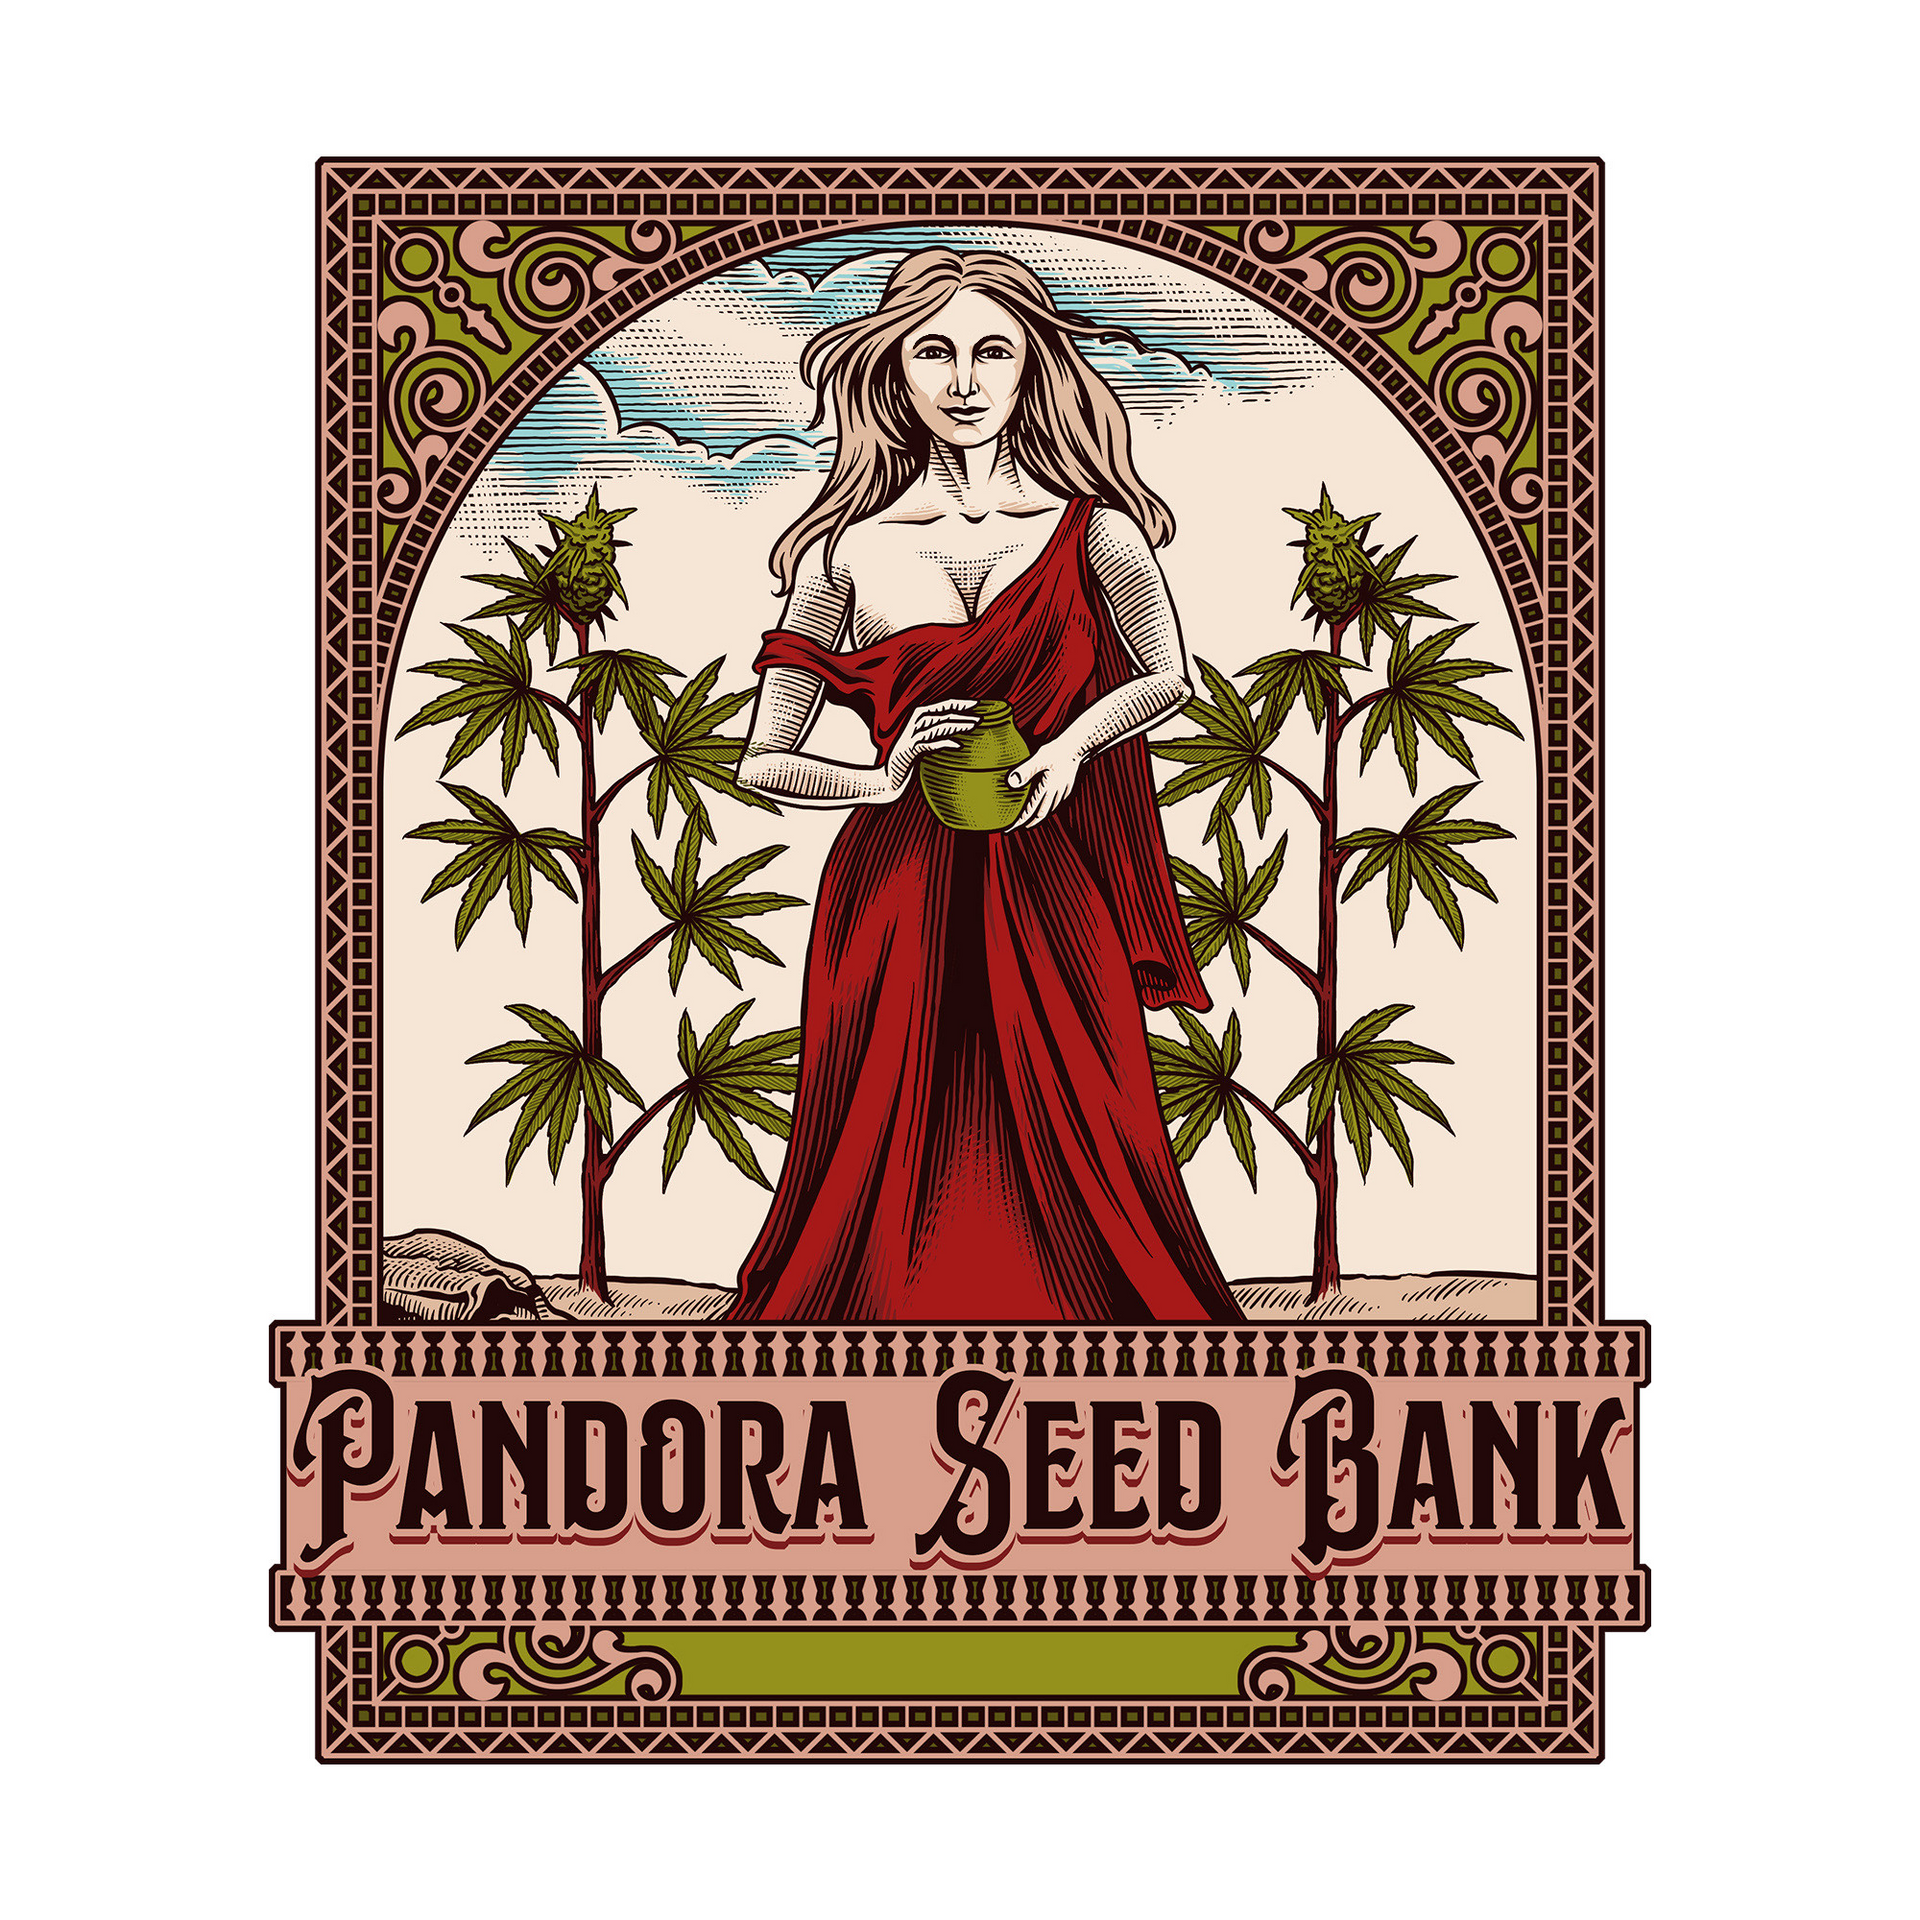 www.pandoraseedbank.com